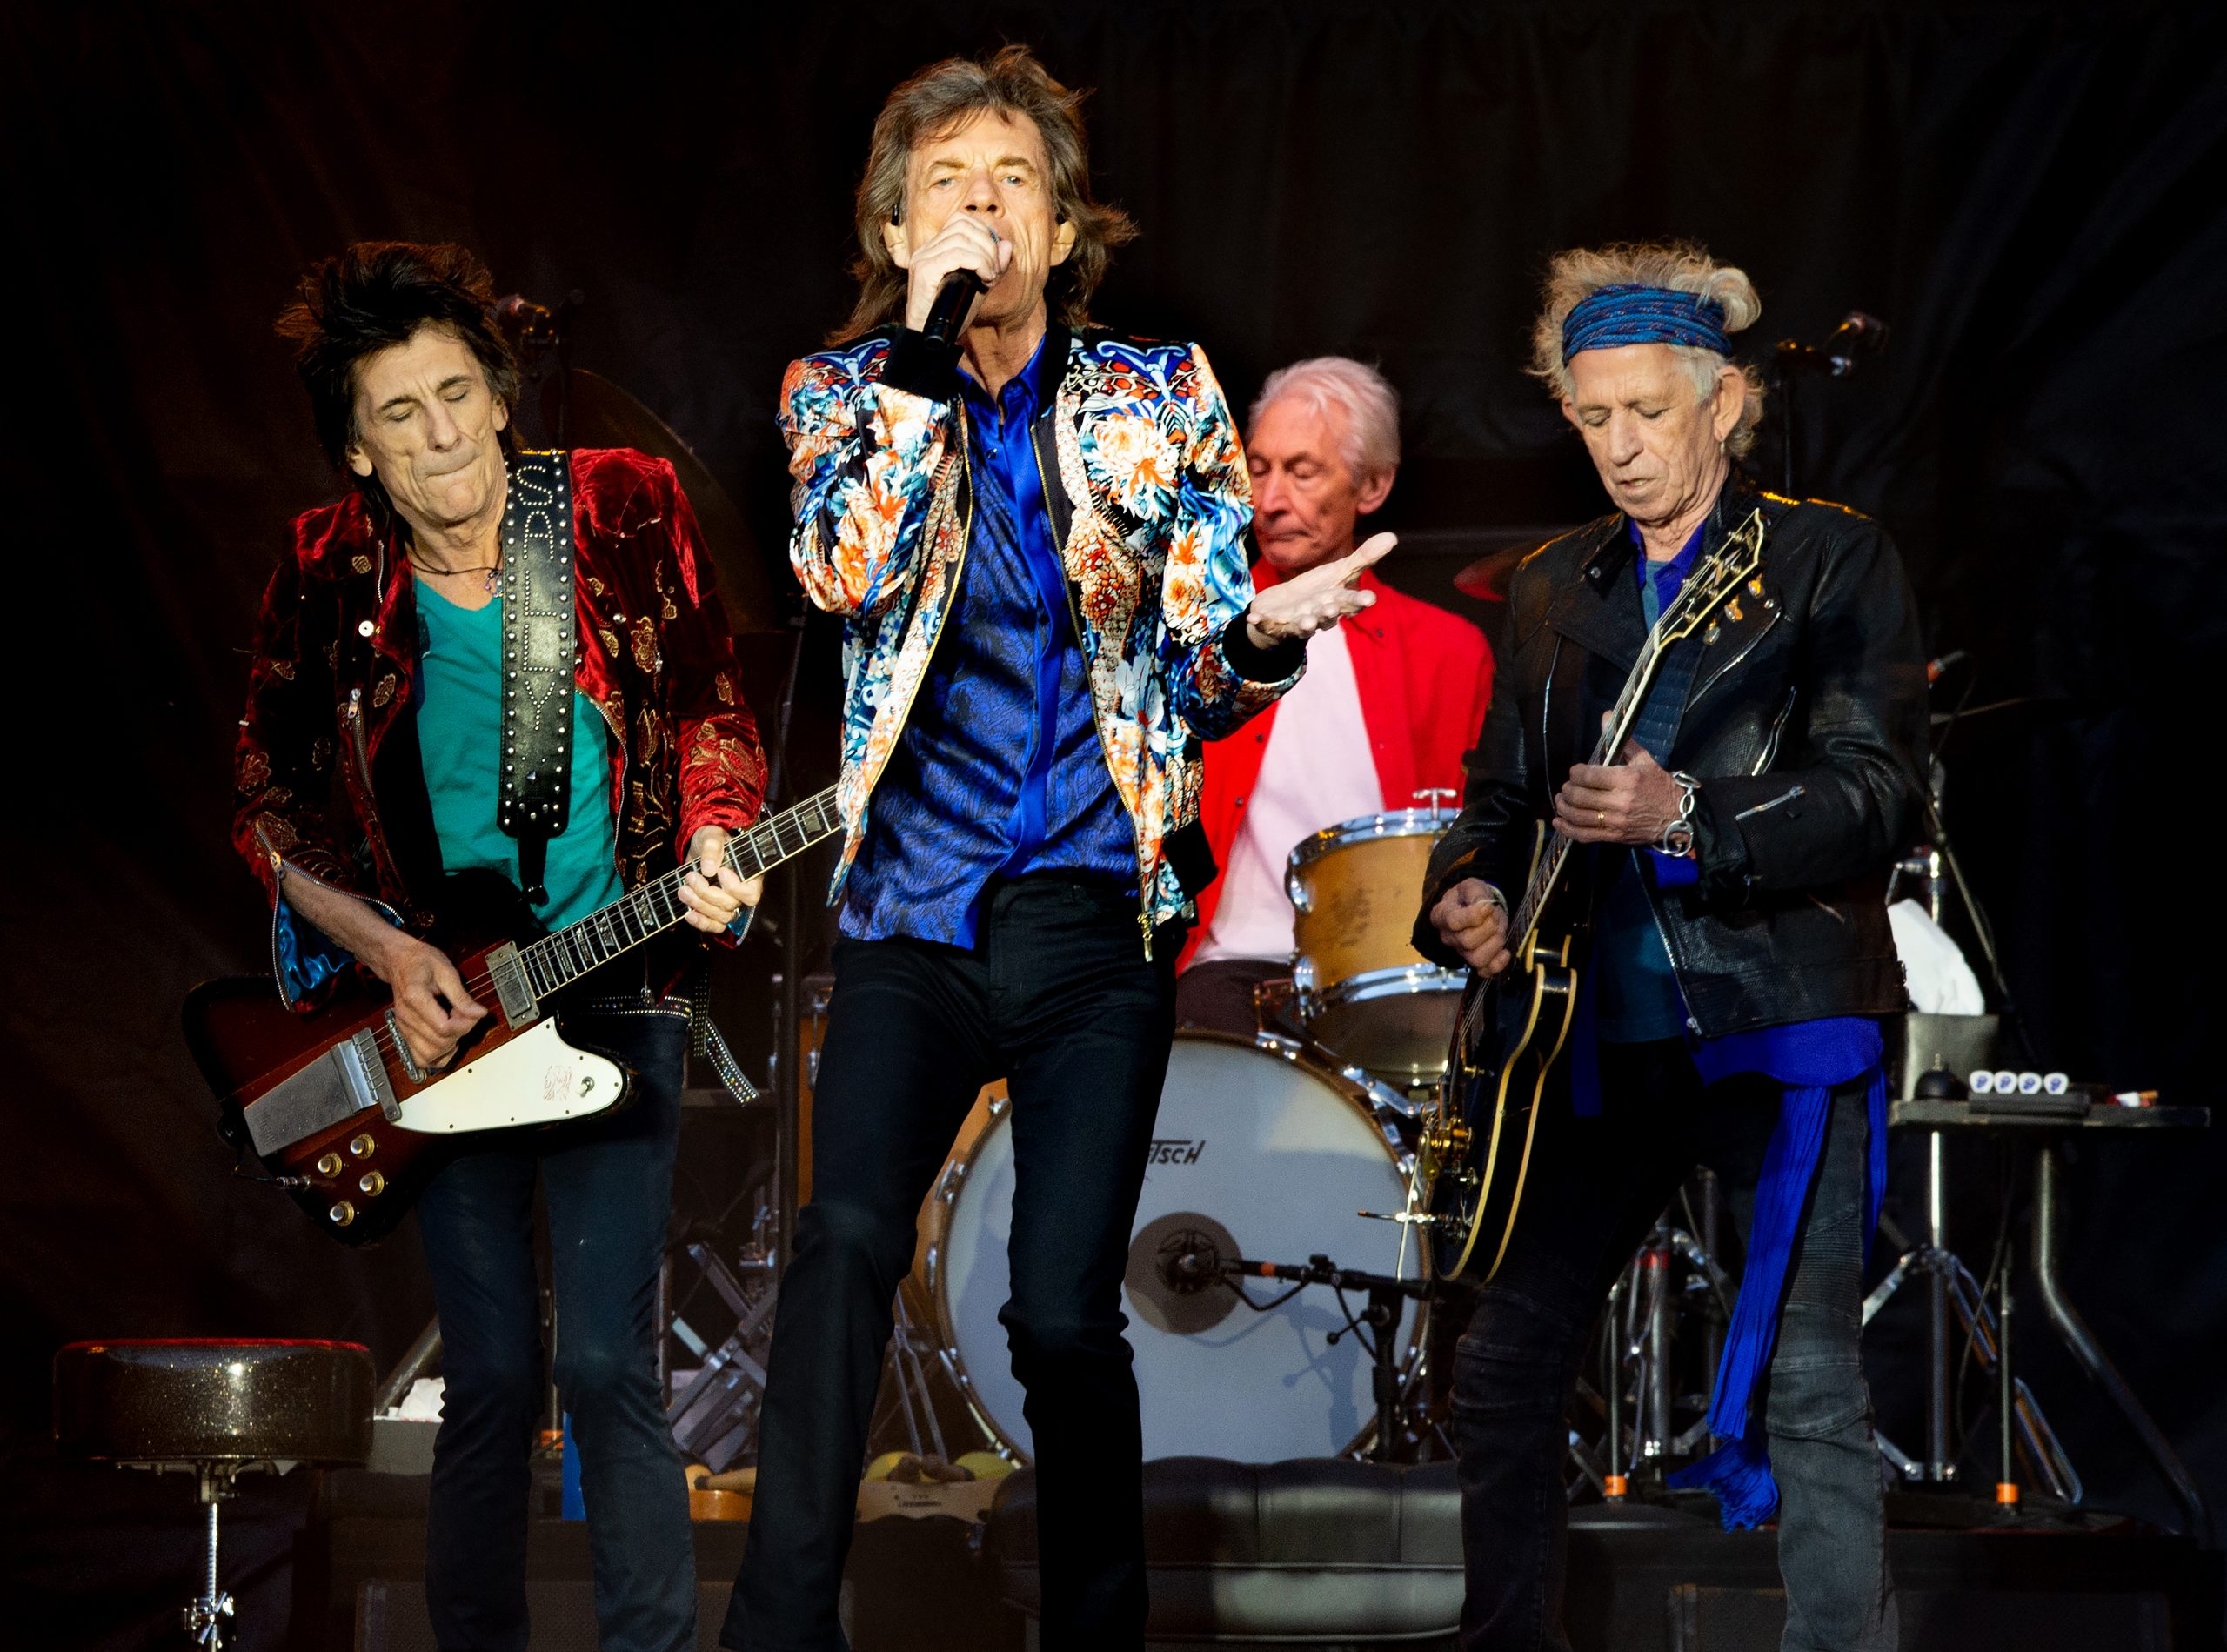 ¡The Rolling Stones estrenan un tema inédito llamado "Criss Cross"!